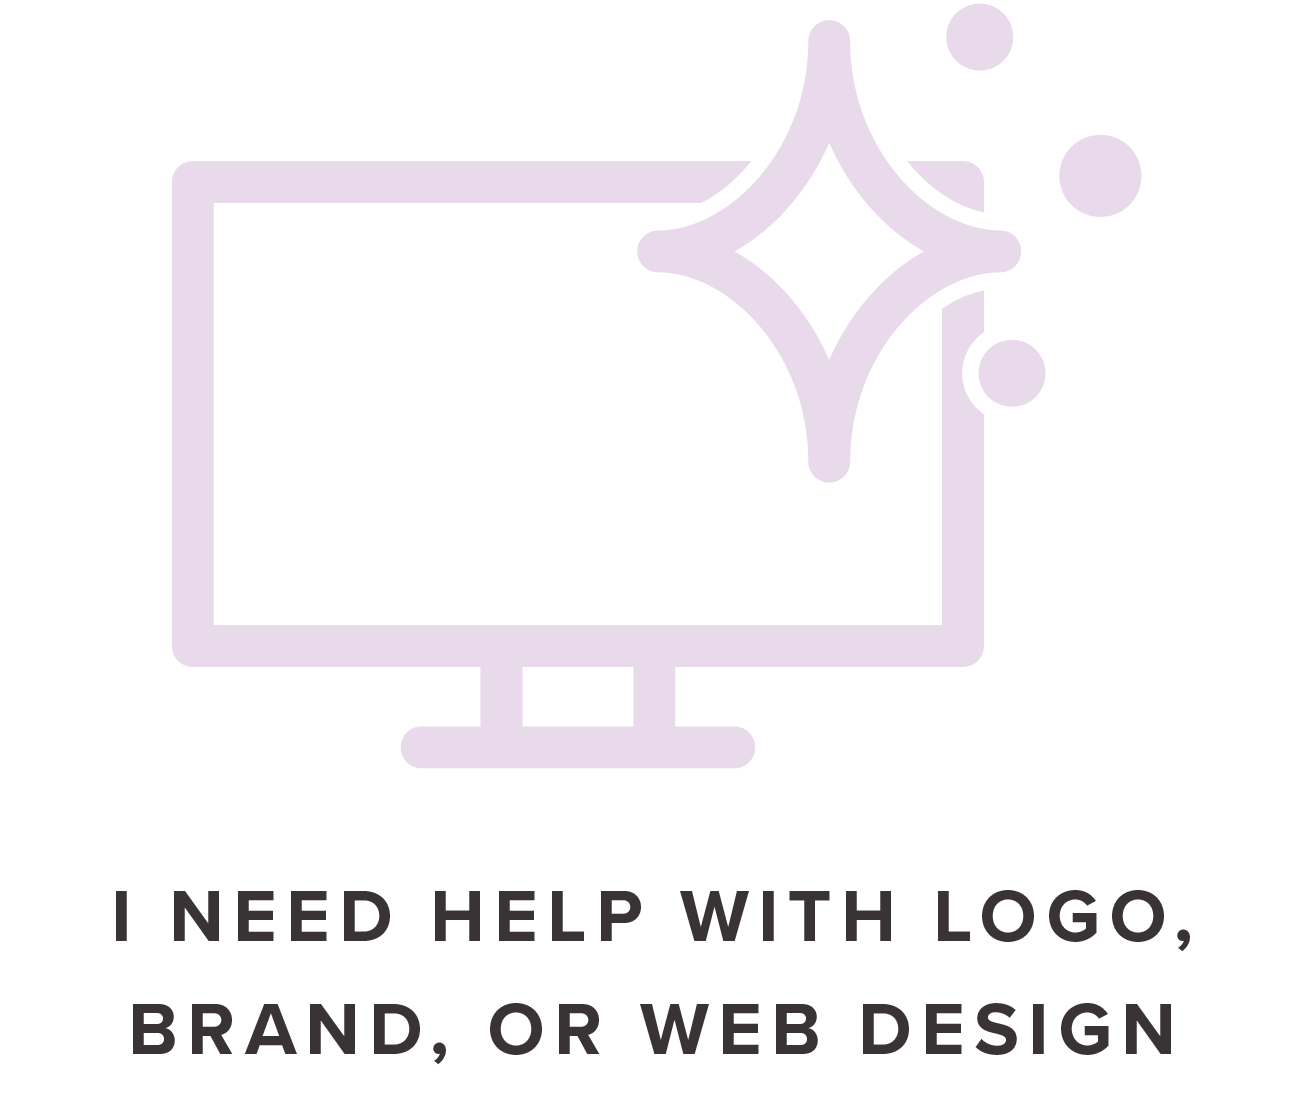 Author Brand Studio Branding Logo And Web Design For Small To